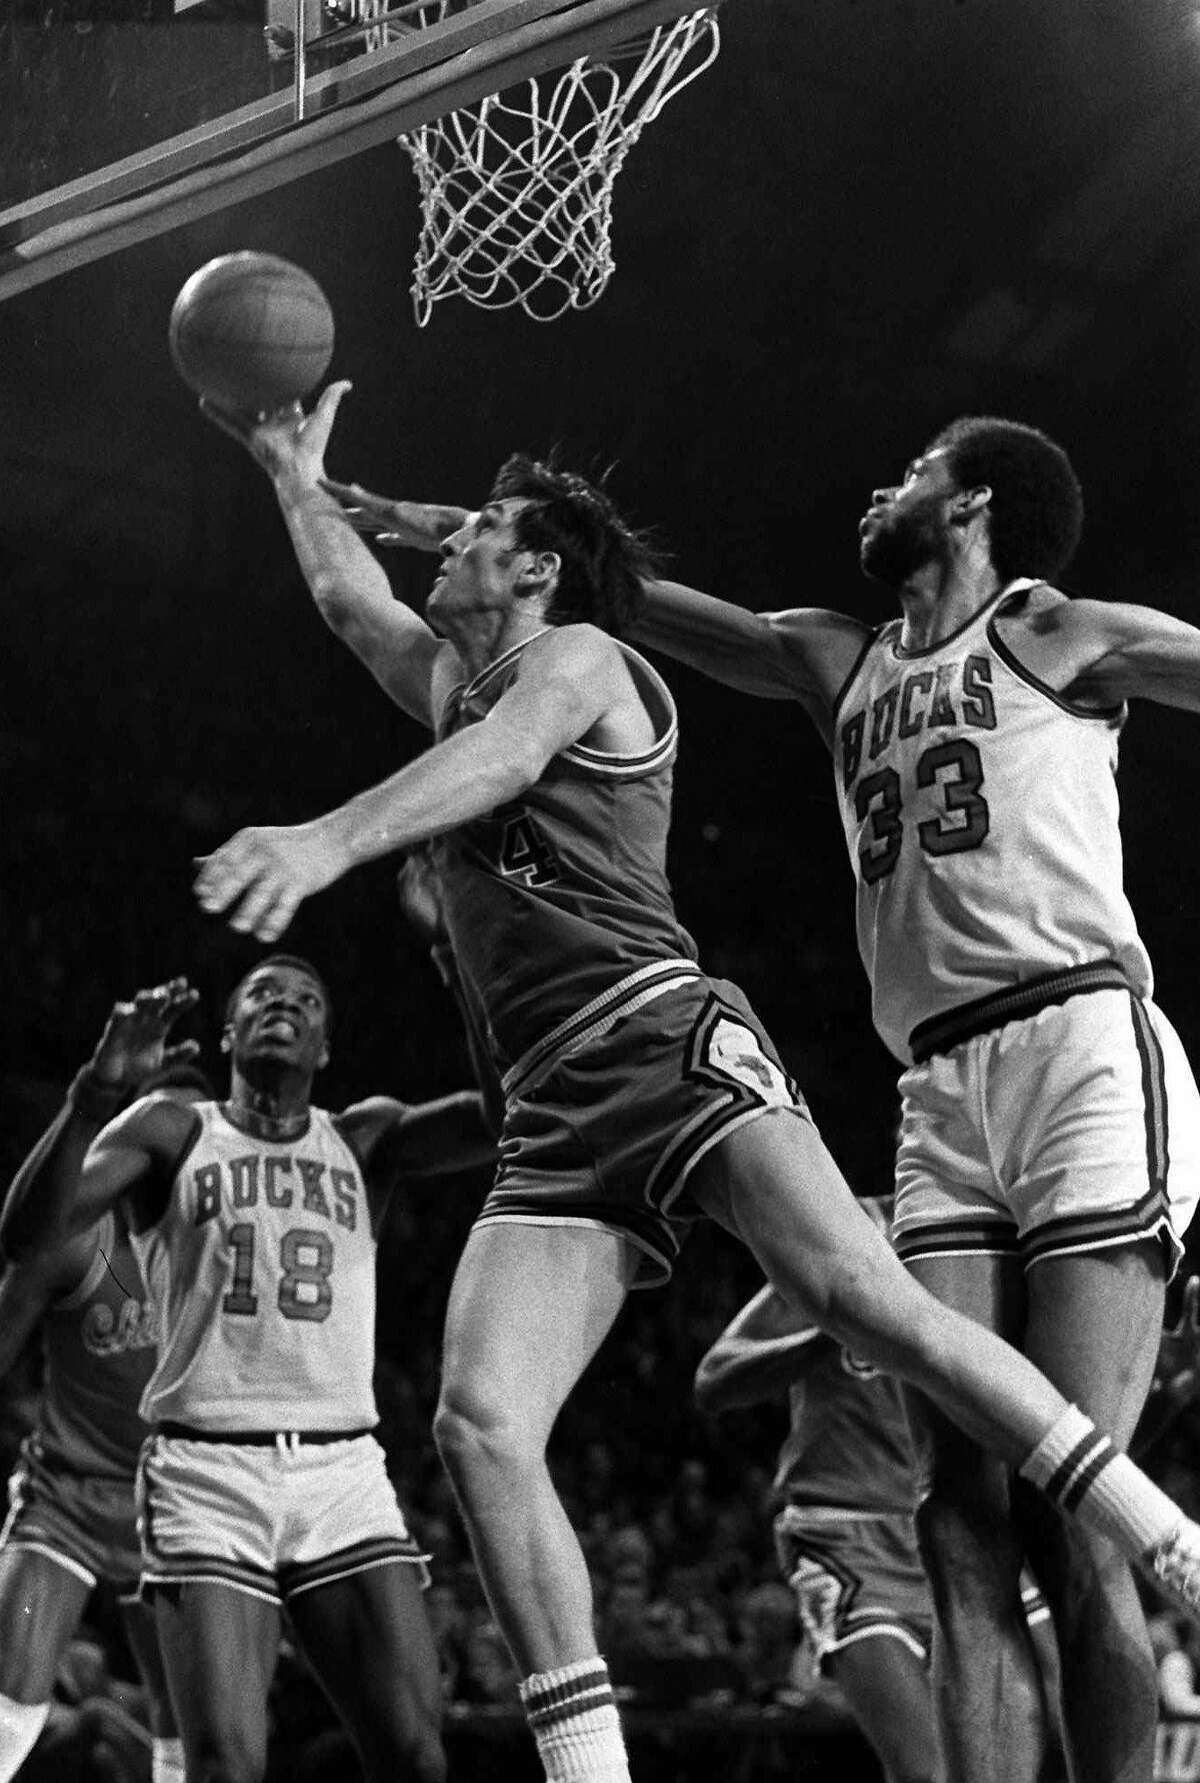 Chicago Bulls’ Jerry Sloan (4) glides in for a layup on the Milwaukee Bucks’ Kareem Abdul-Jabbar (33) on Feb. 16, 1974.